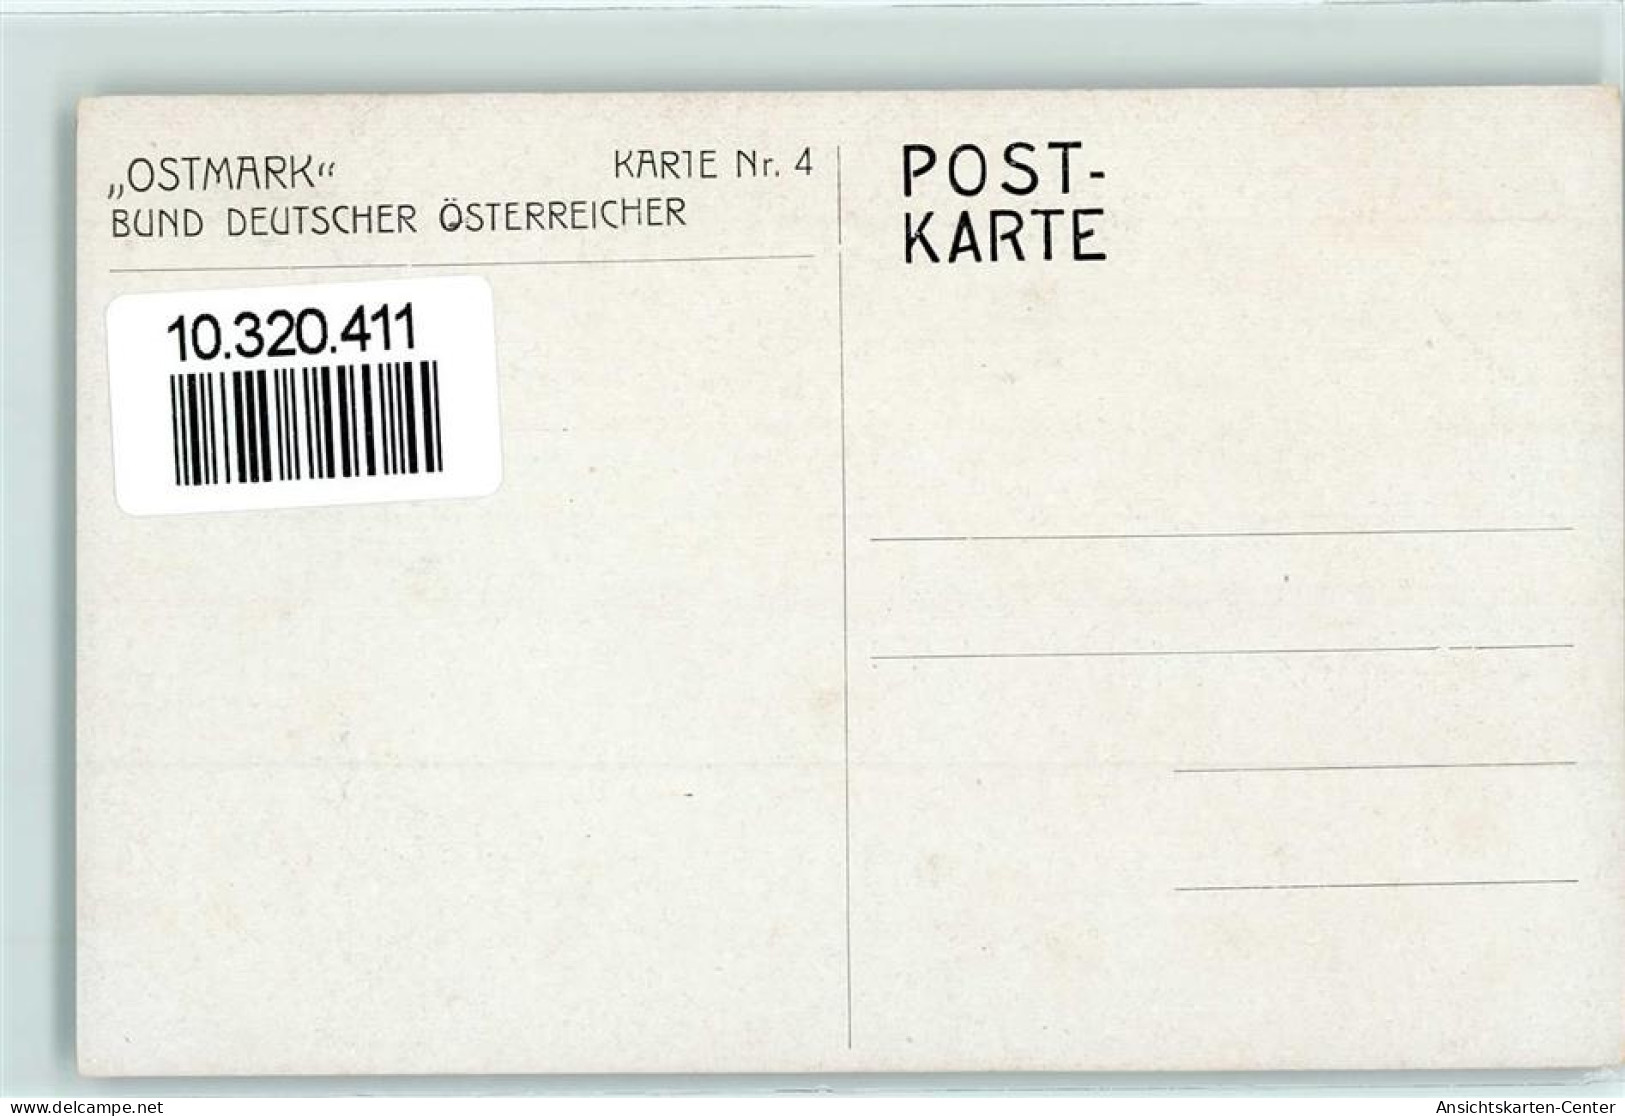 10320411 - Ostmark Karte Nr. 4 AK - Kutzer, Ernst